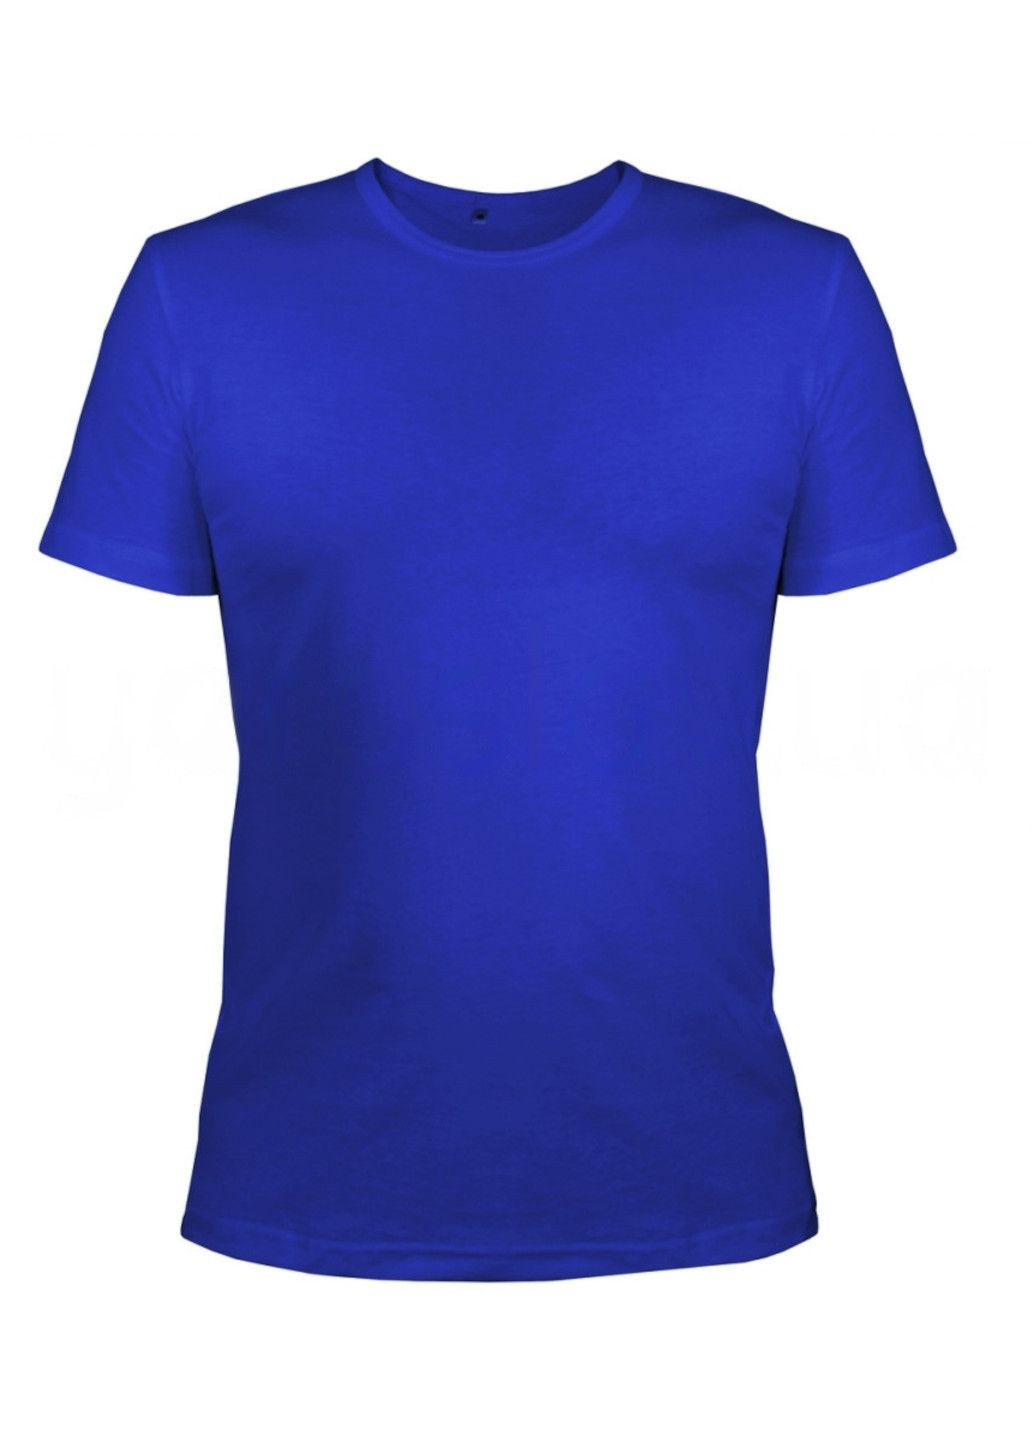 Синяя футболка мужская м.45 с коротким рукавом Ярослав